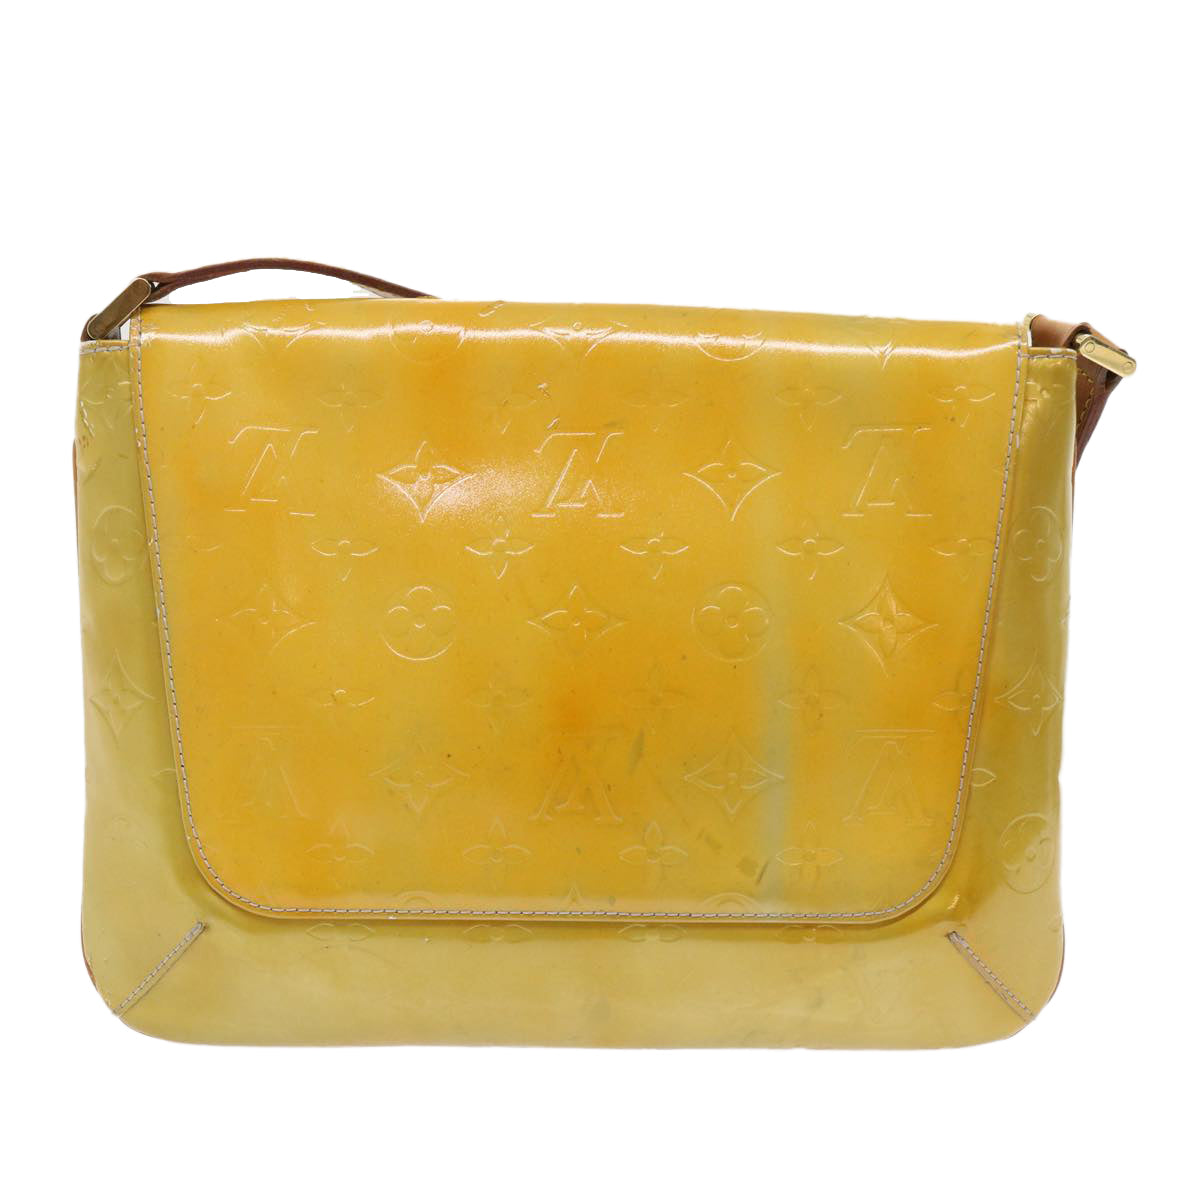 Louis Vuitton Thompson Street Yellow Patent Leather Shoulder Bag (Pre